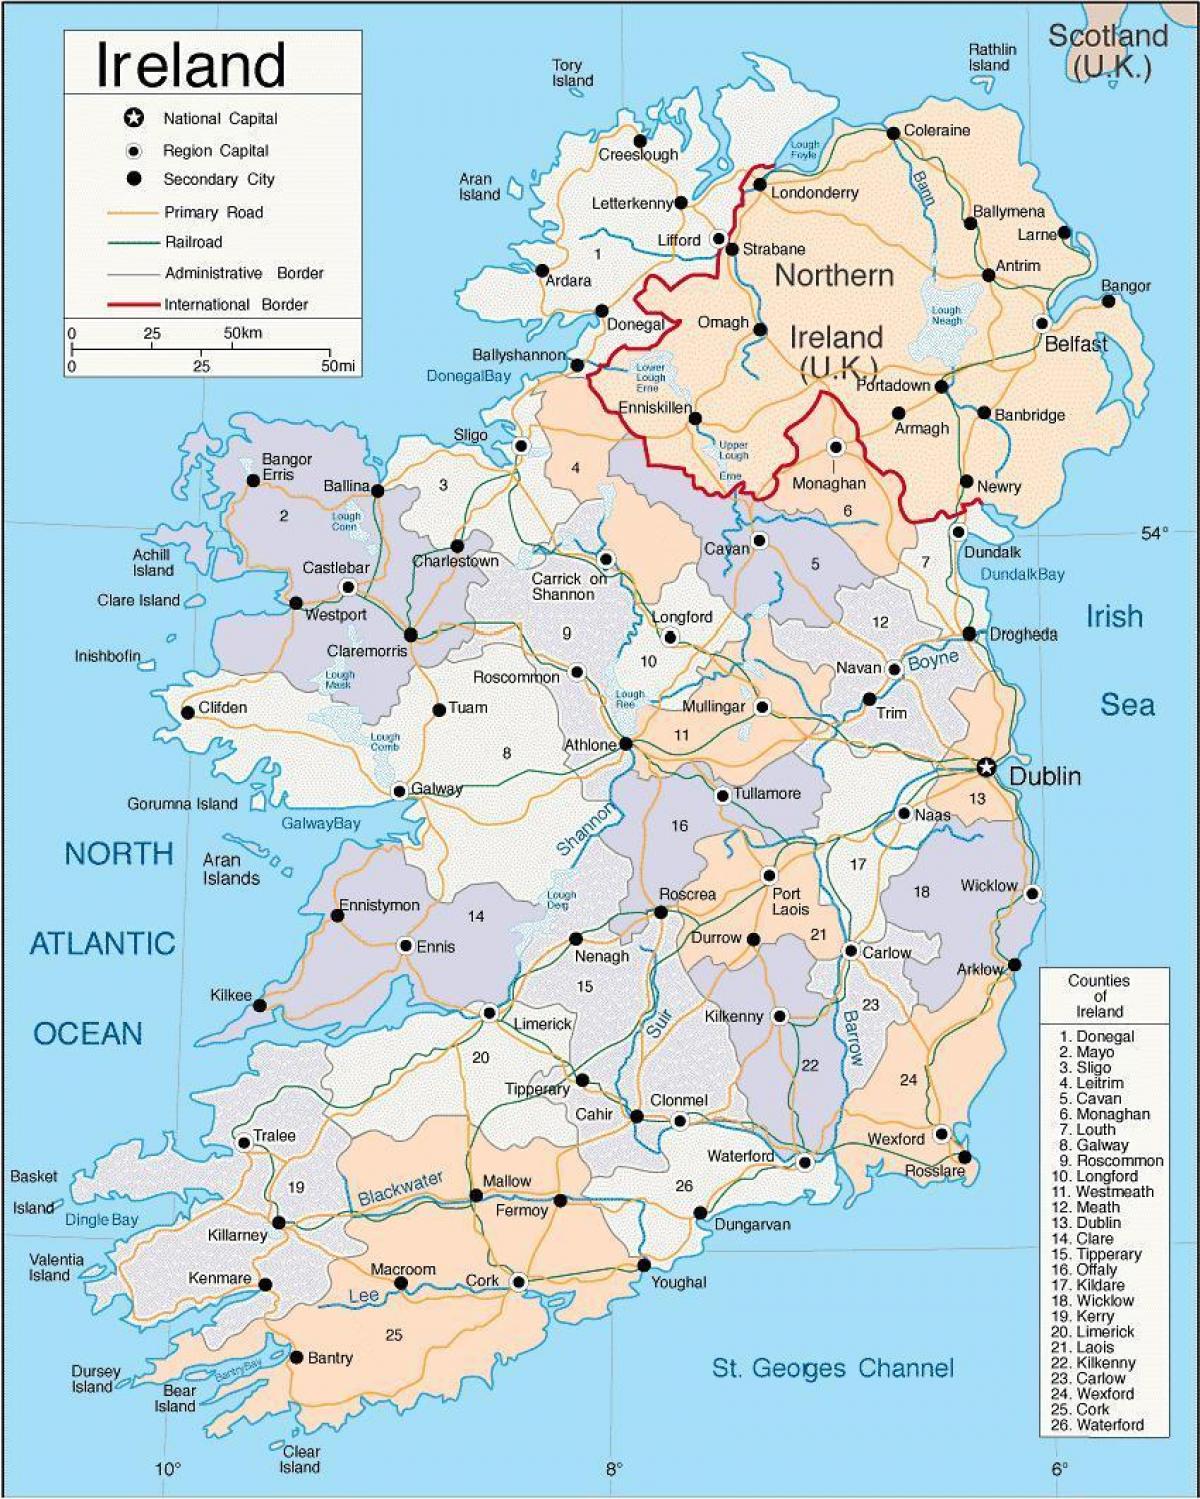 bản đồ của ireland, bao gồm cả các quận